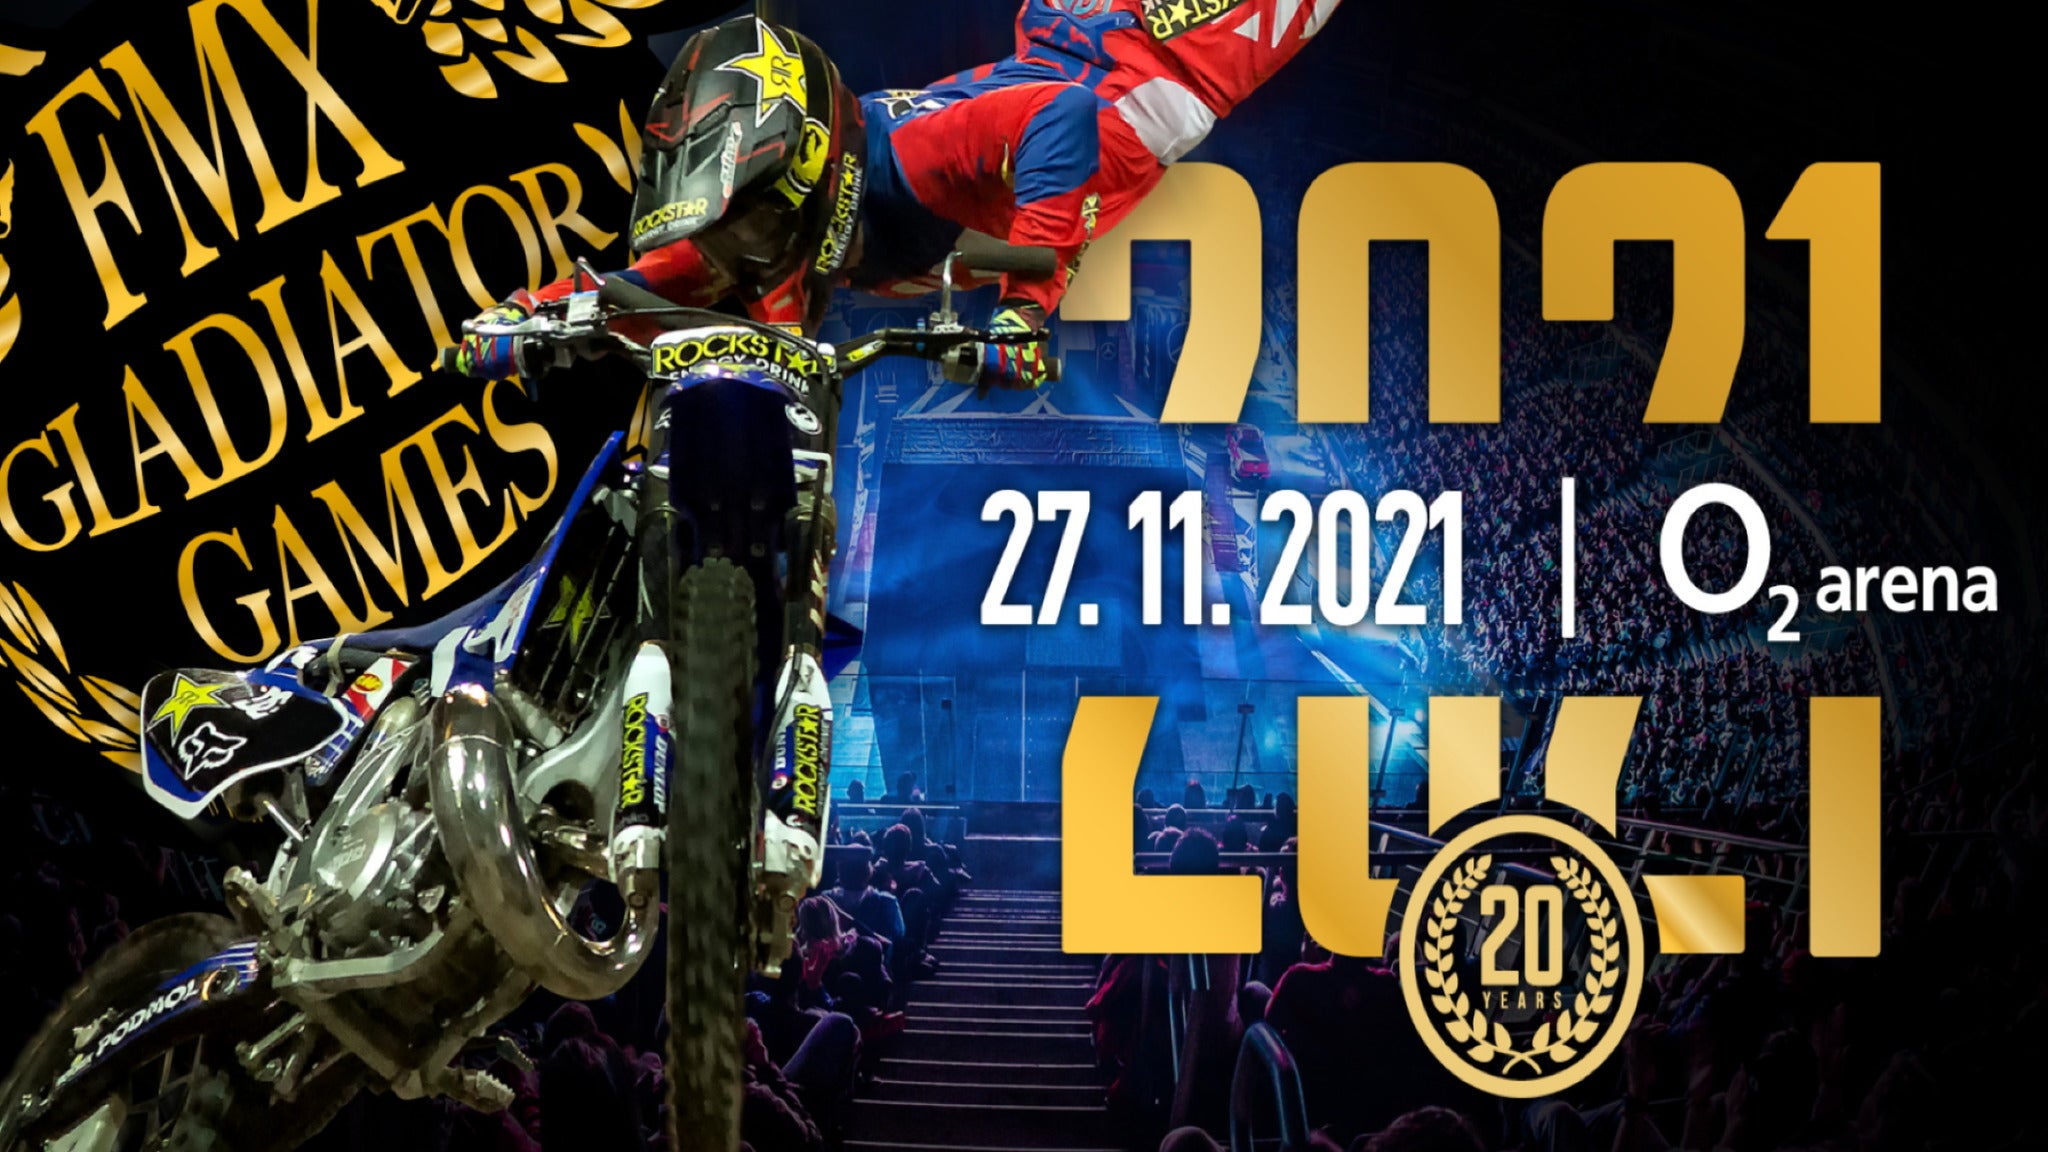 FMX Gladiator Games- Praha O2 arena -O2 arena Praha 9 Českomoravská 2345/17a, Praha 9 19000